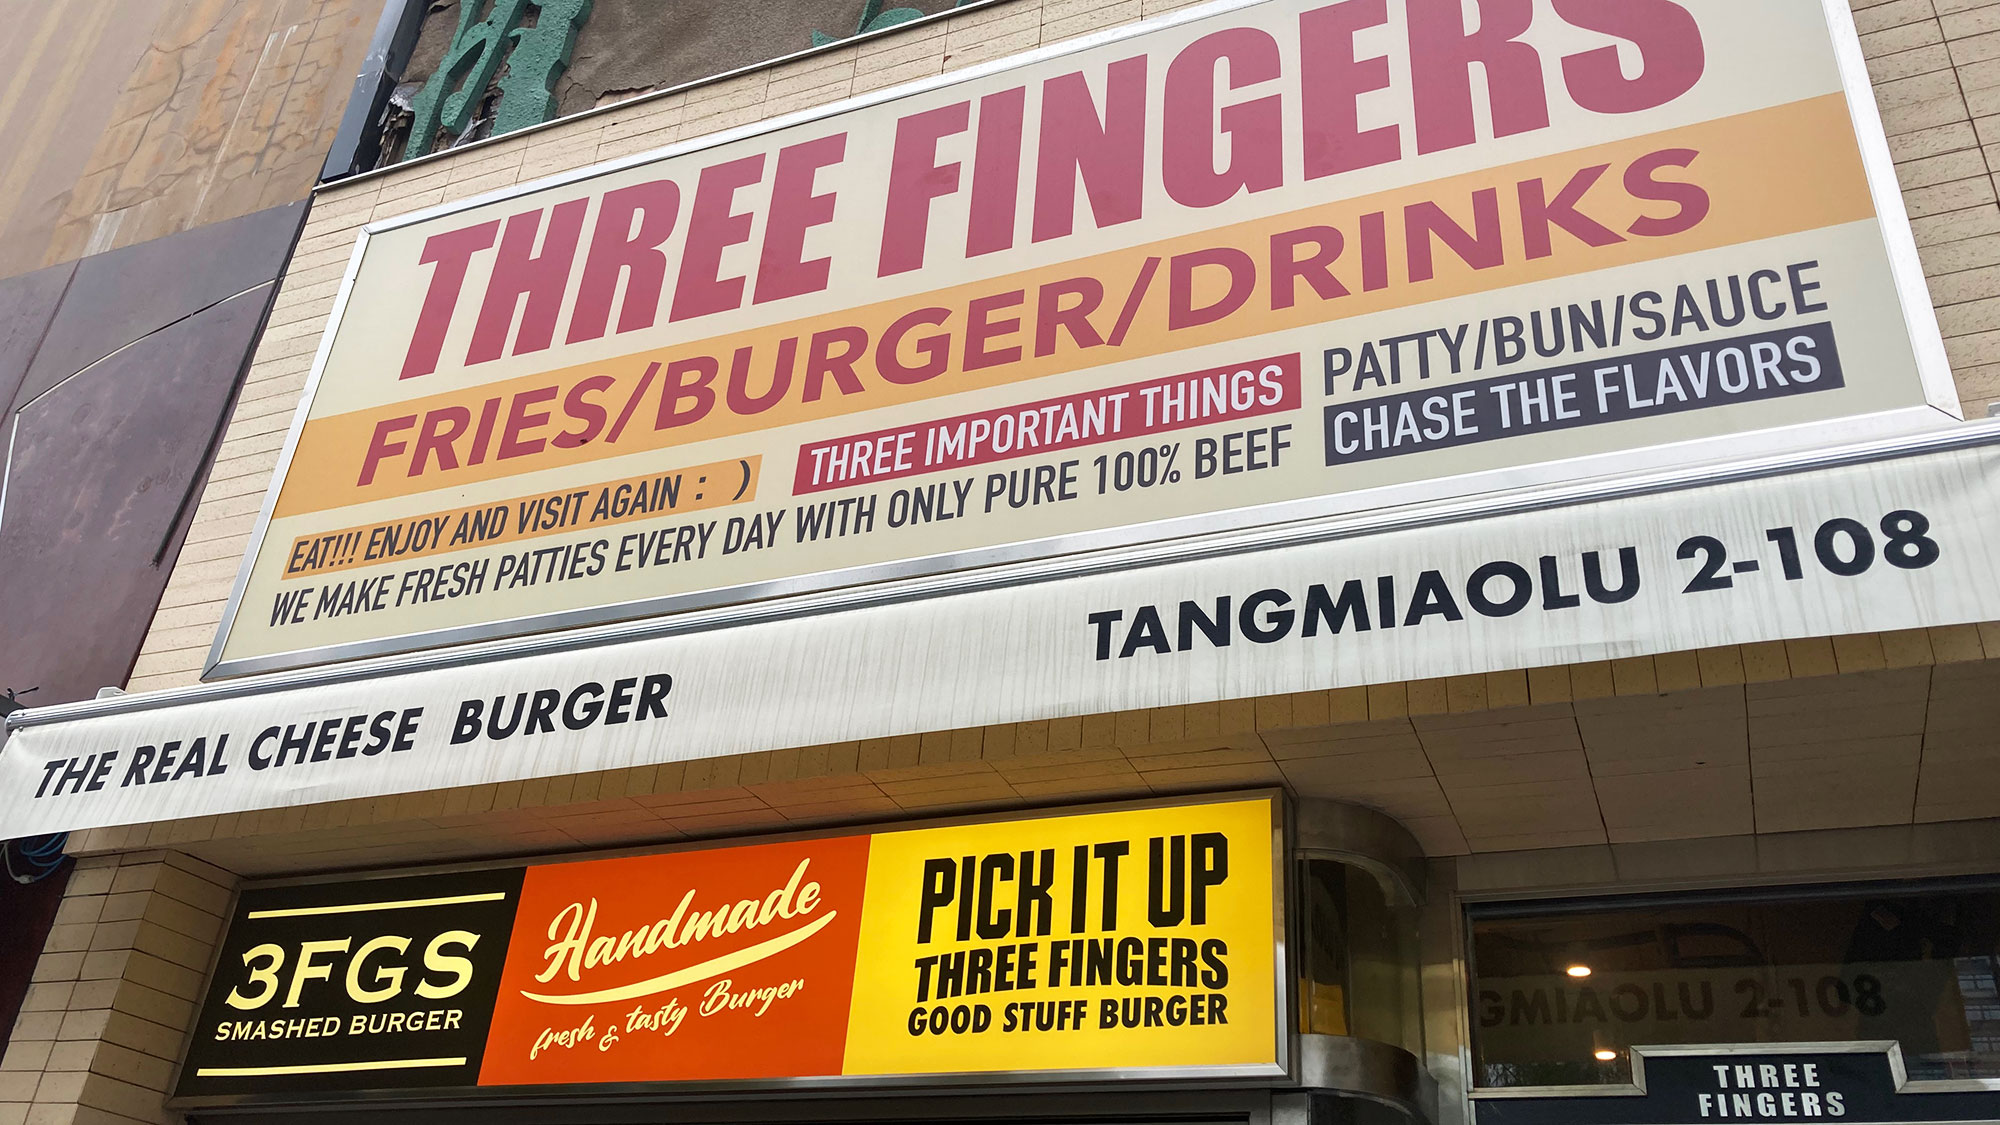 Three fingers burger